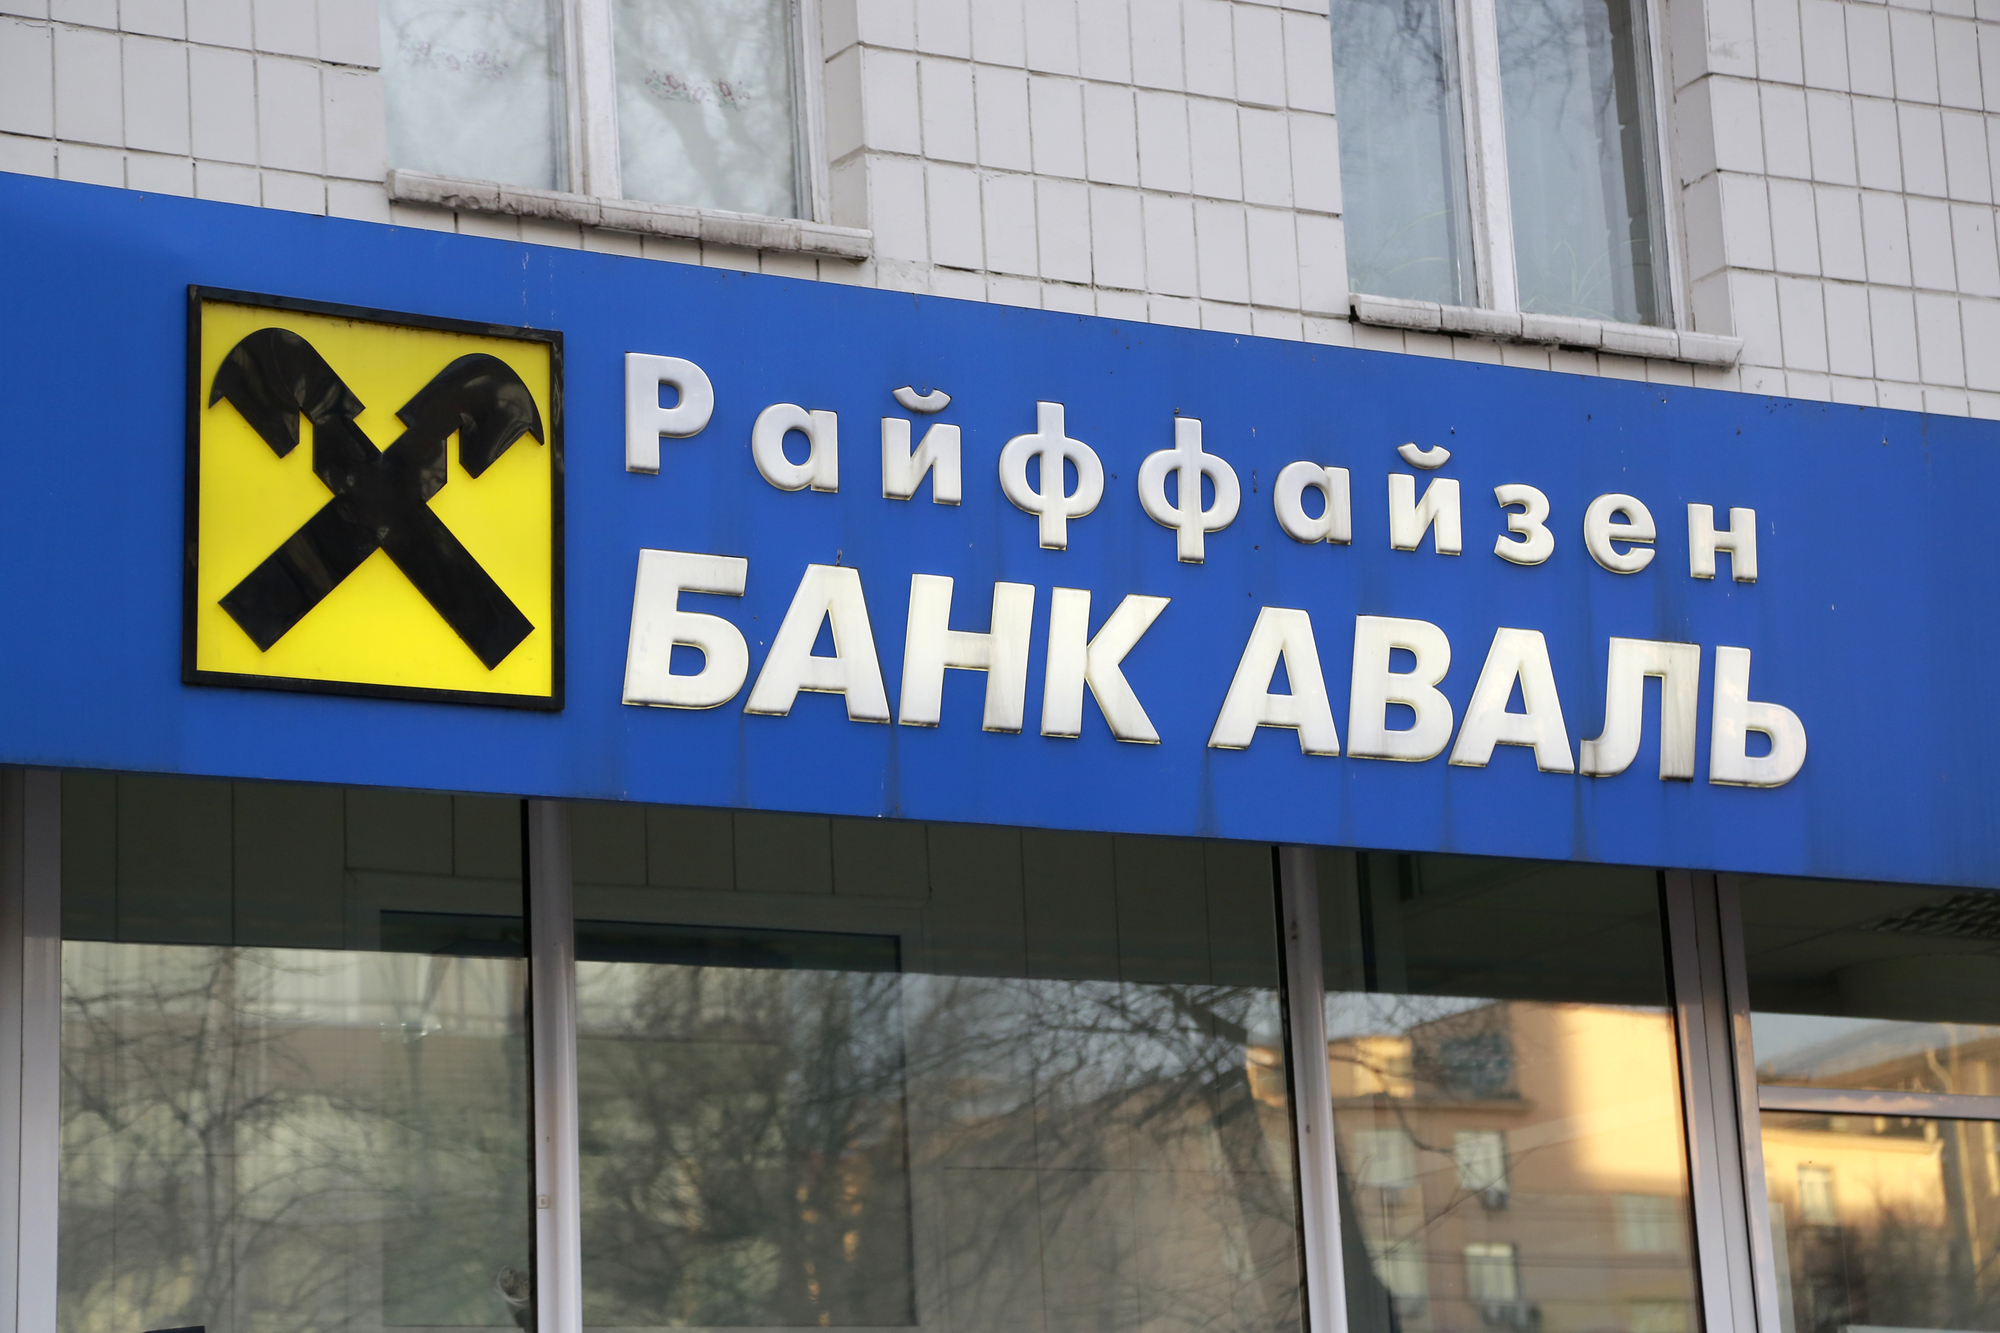 Raiffeisen Bank Aval in Kiev, Ukraine